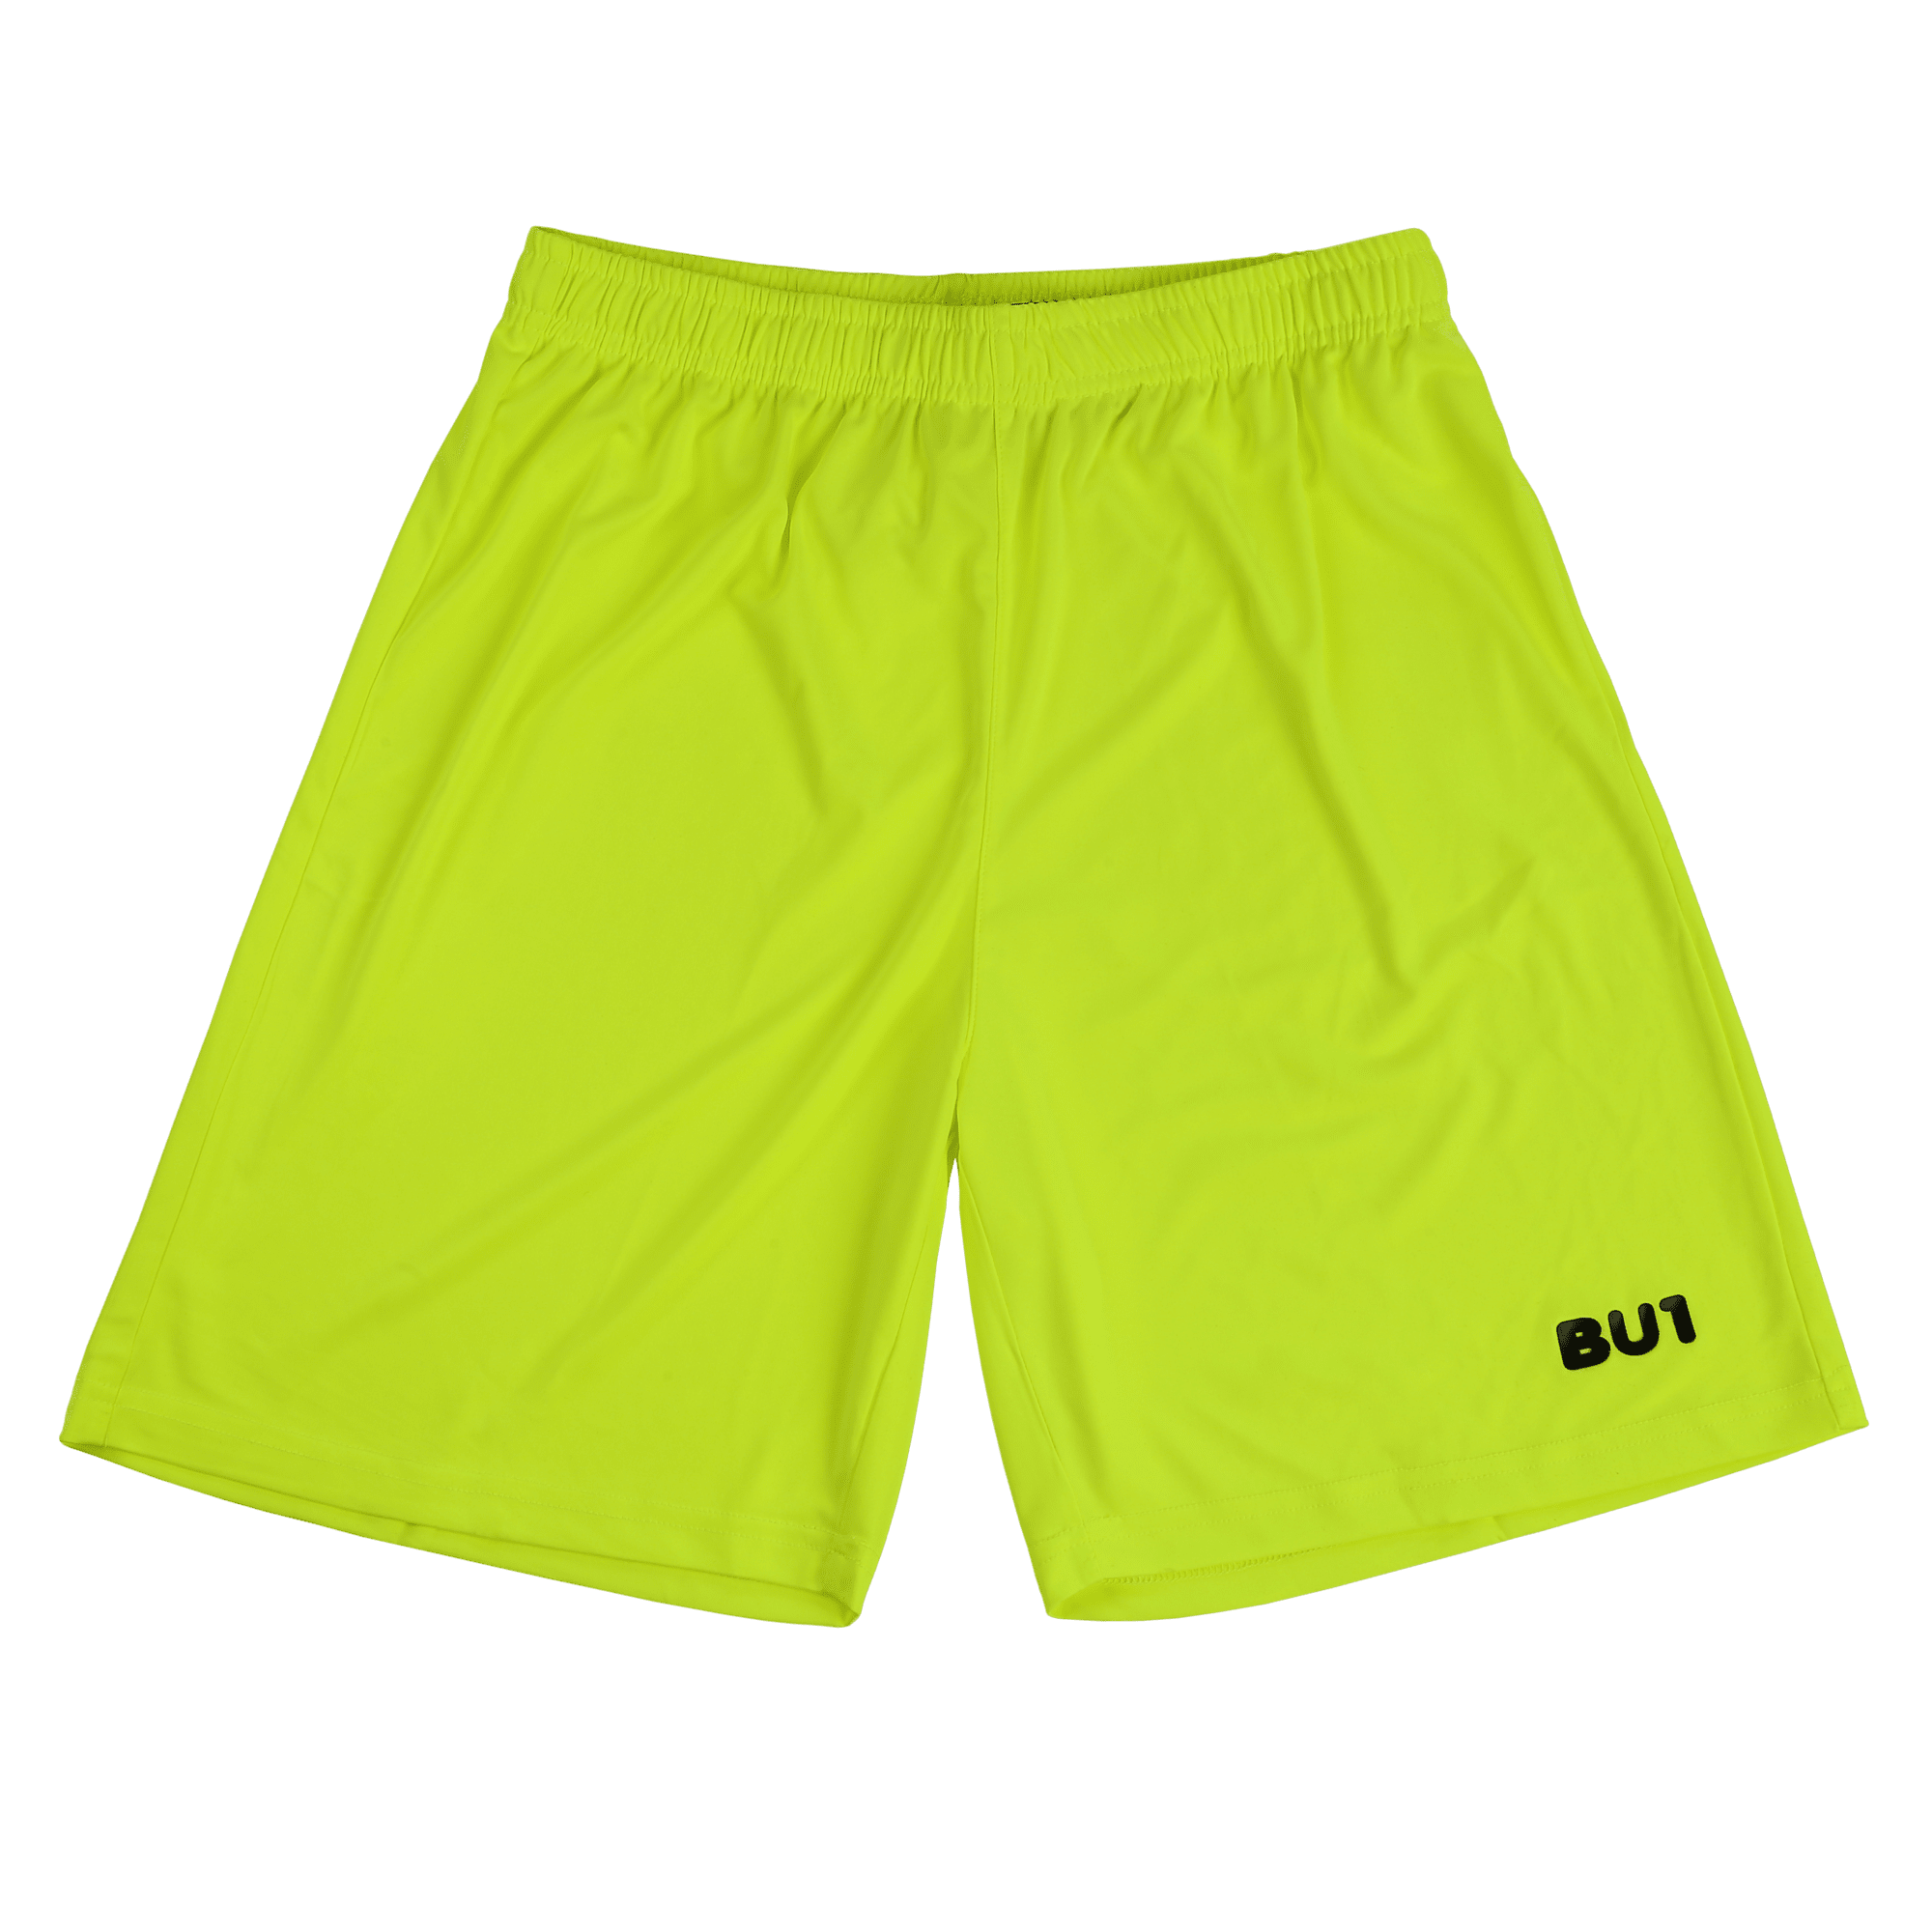 BU1 shorts 20 neon yellow